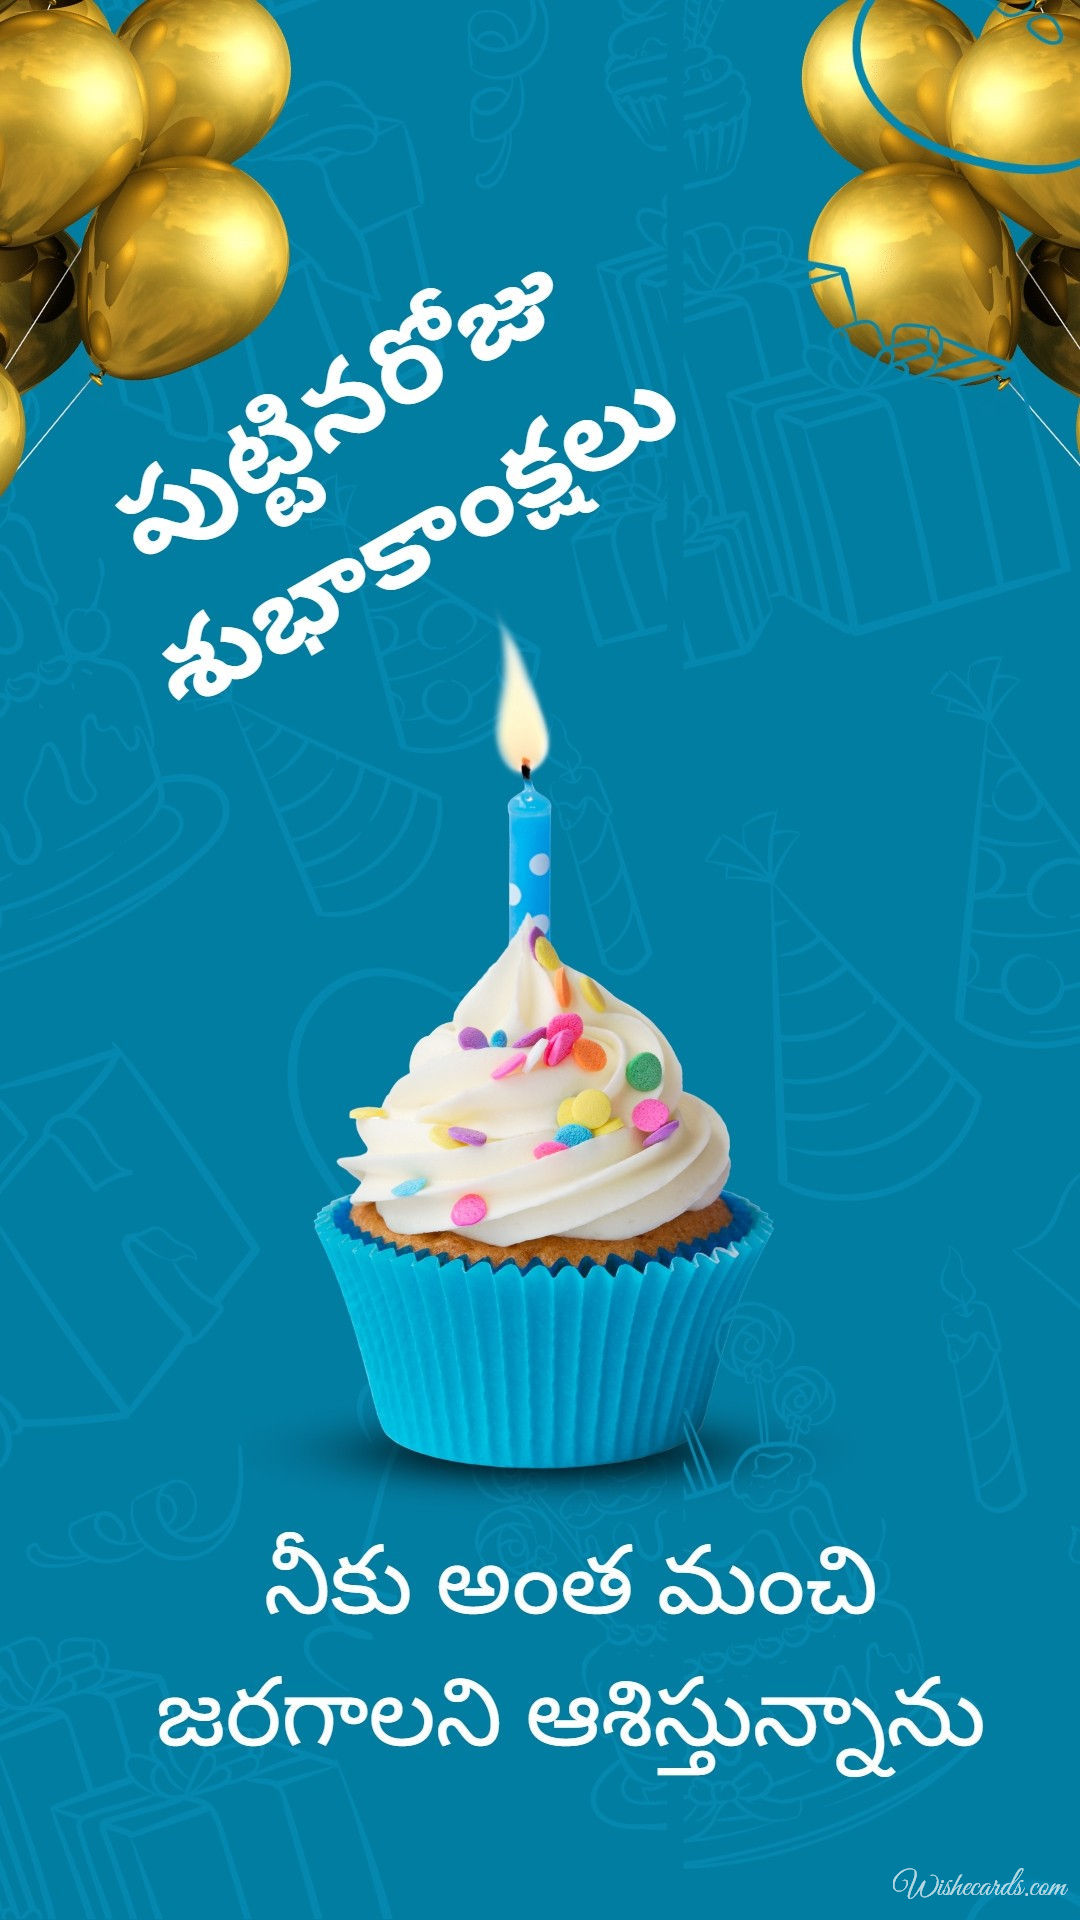 Happy Birthday Wish Image Telugu